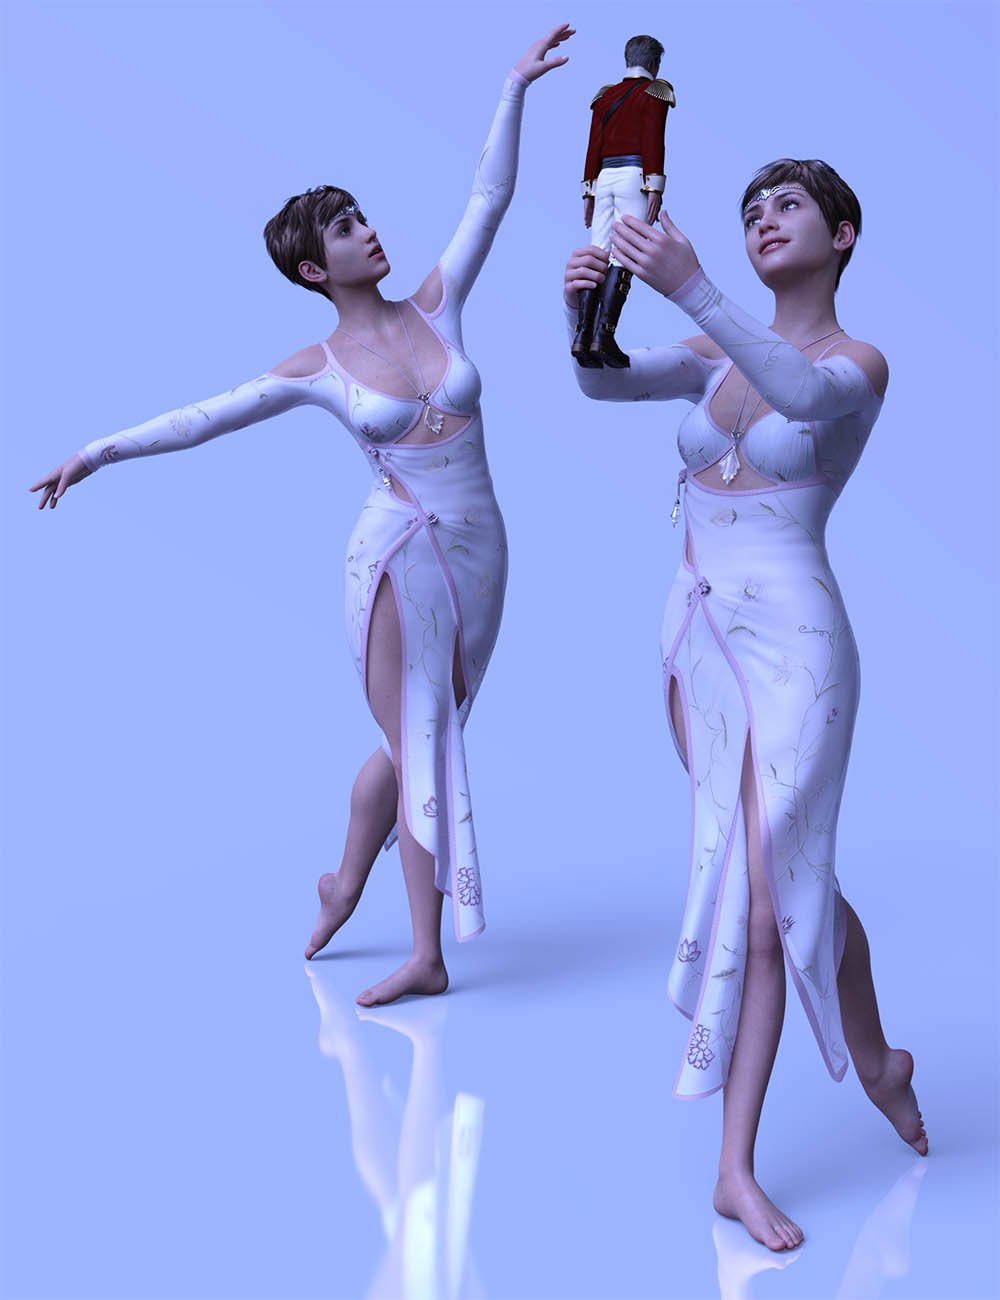 CDI Nutcracker Ballet Poses for Genesis 8.1